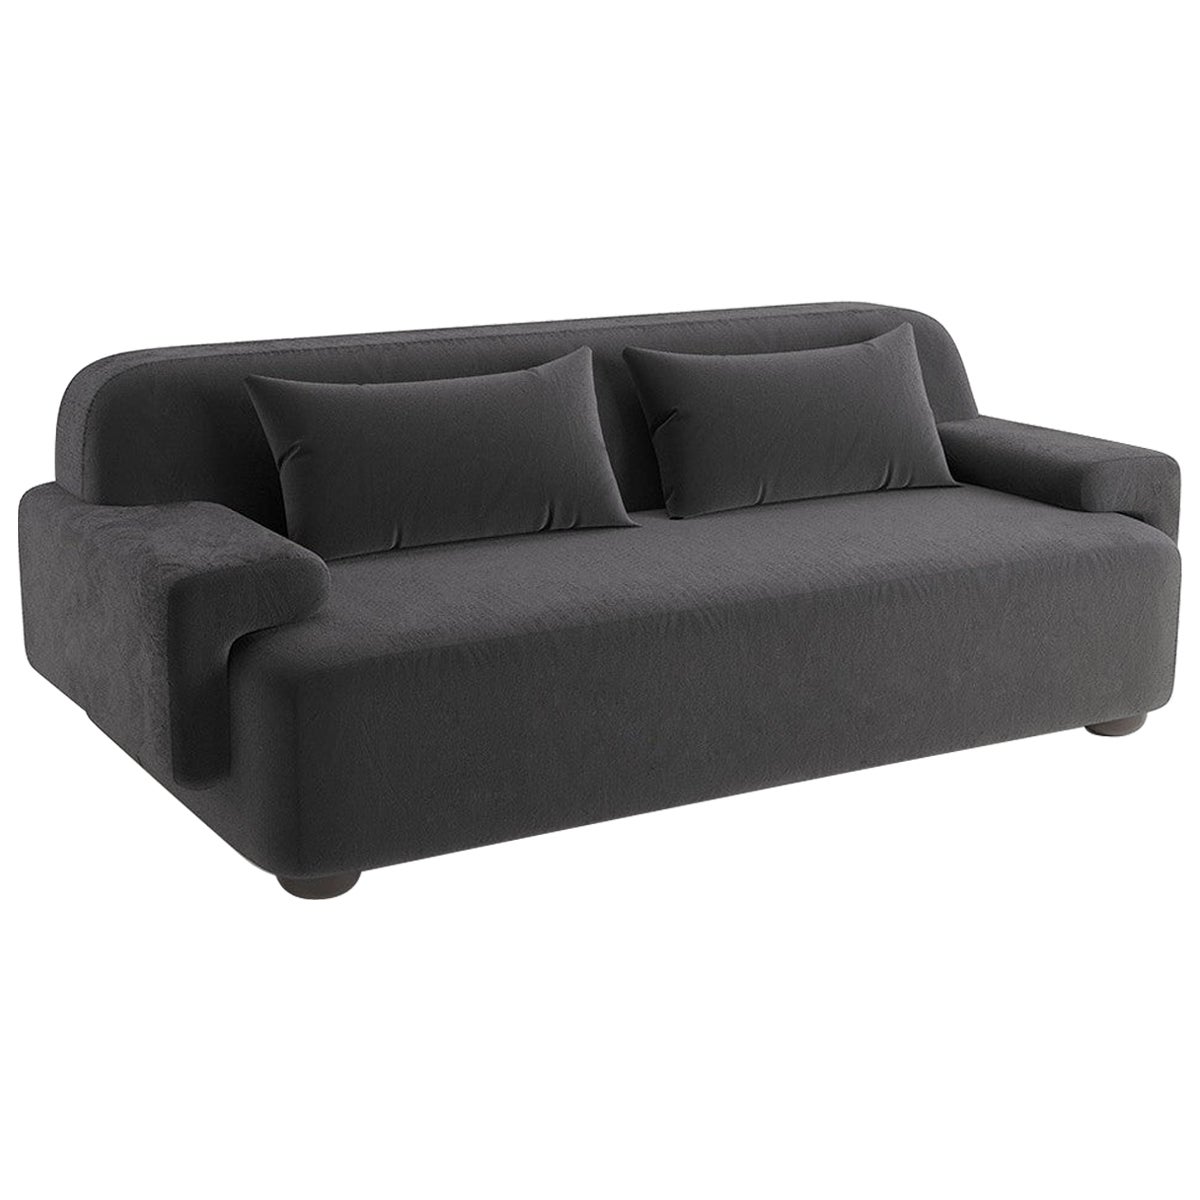 Popus Editions Lena 4 Seater Sofa in Dark Brown Como Velvet Upholstery